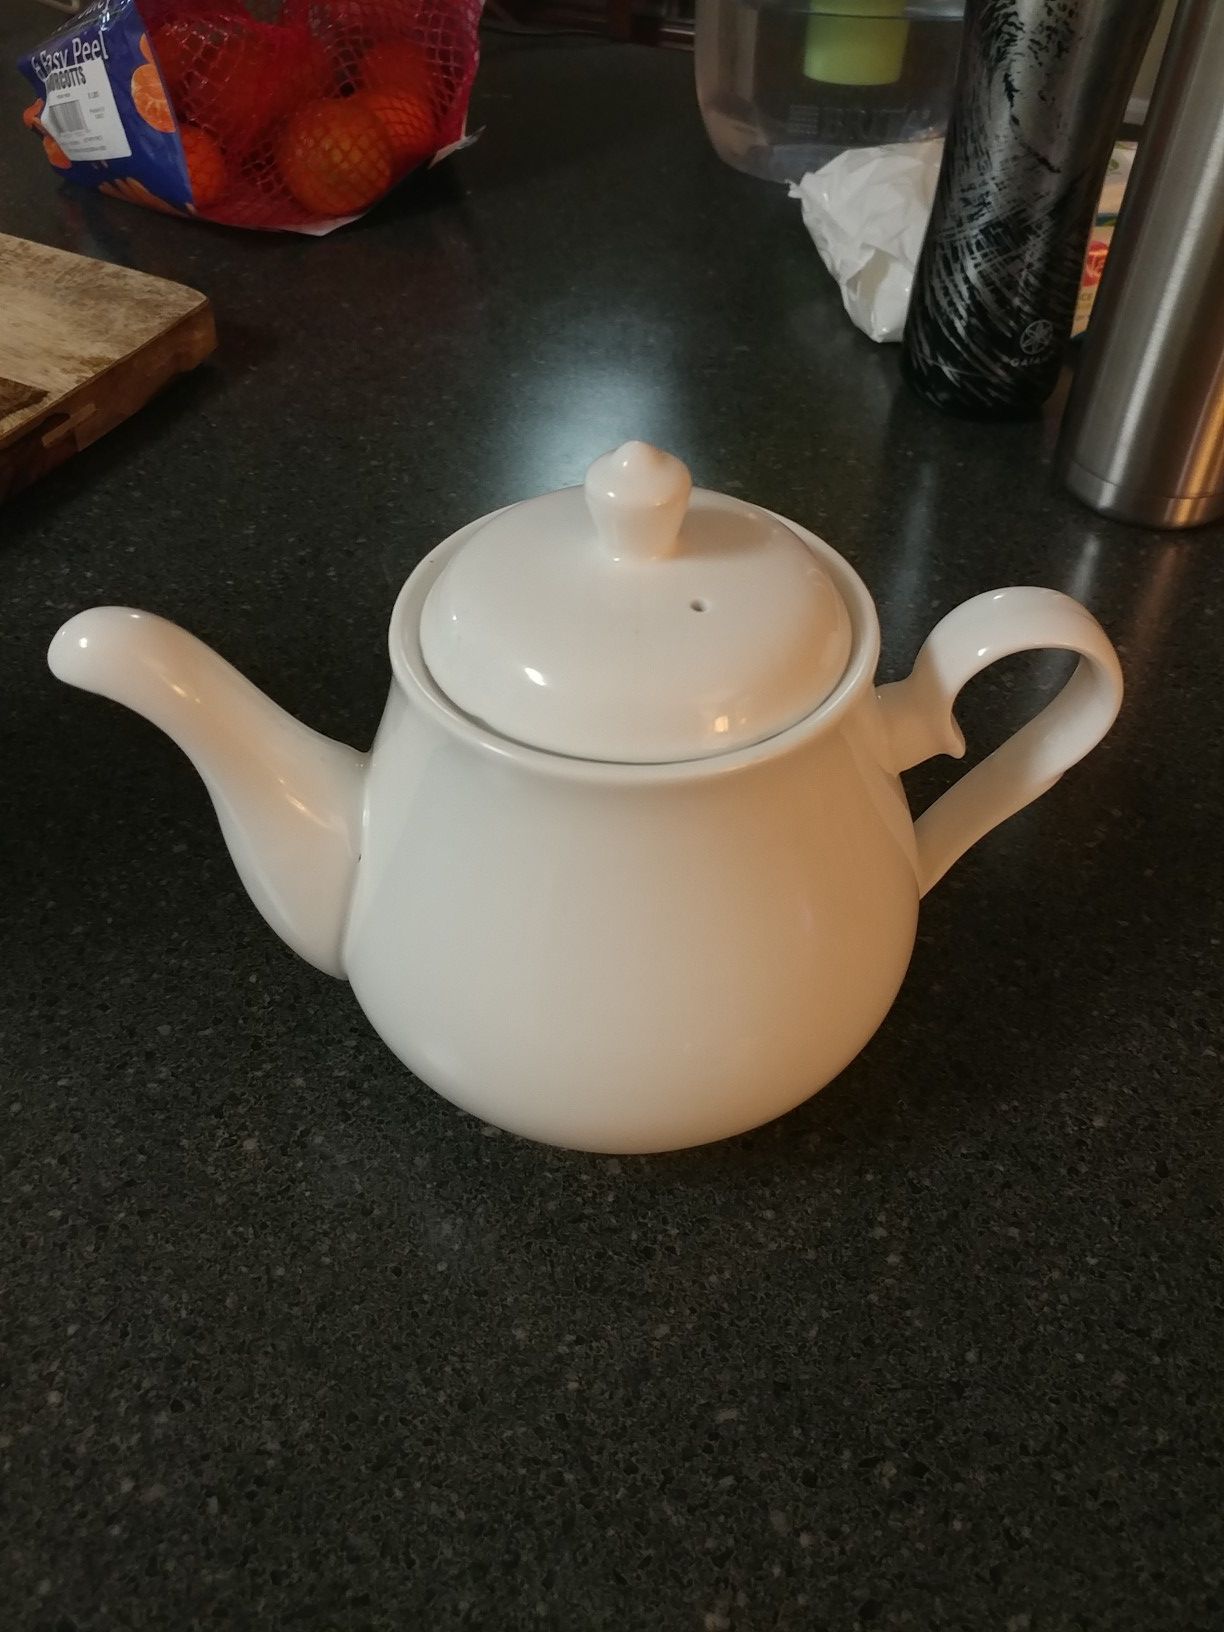 8.5" teacup